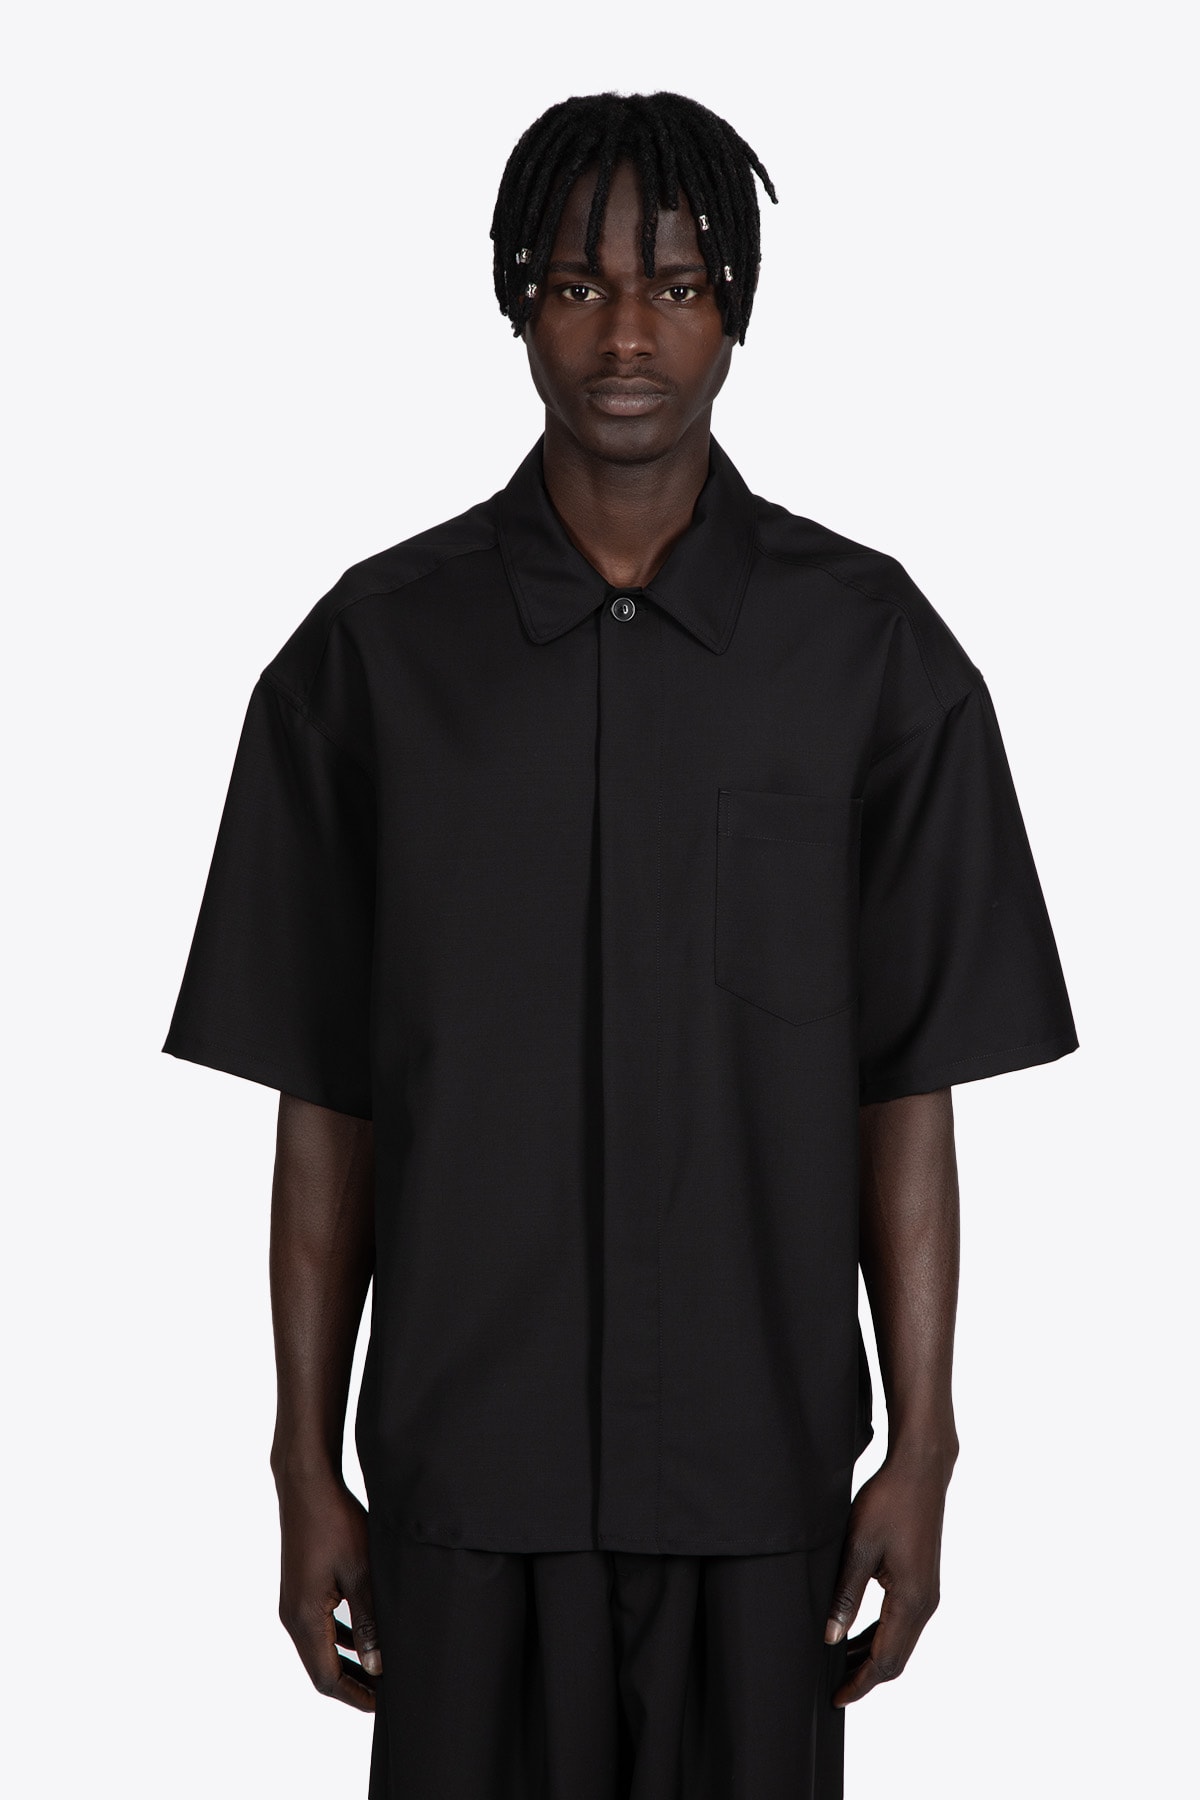 lownn Chemise Minimal Mc Black tailored shirt with short sleeves - Minimal shirt short